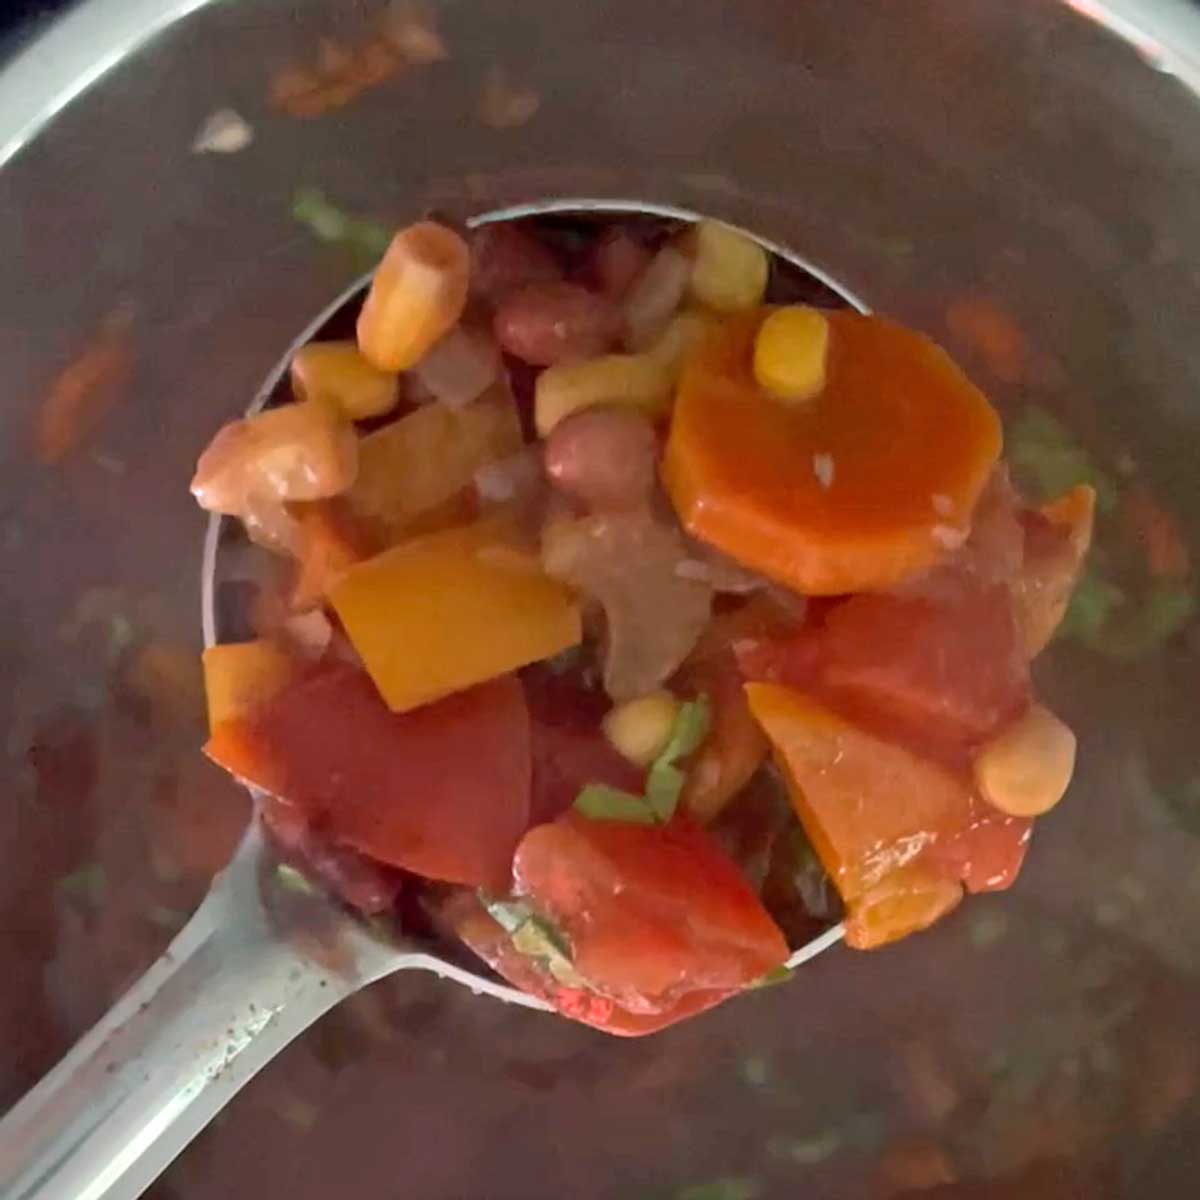 Tortilla soup in a ladle.